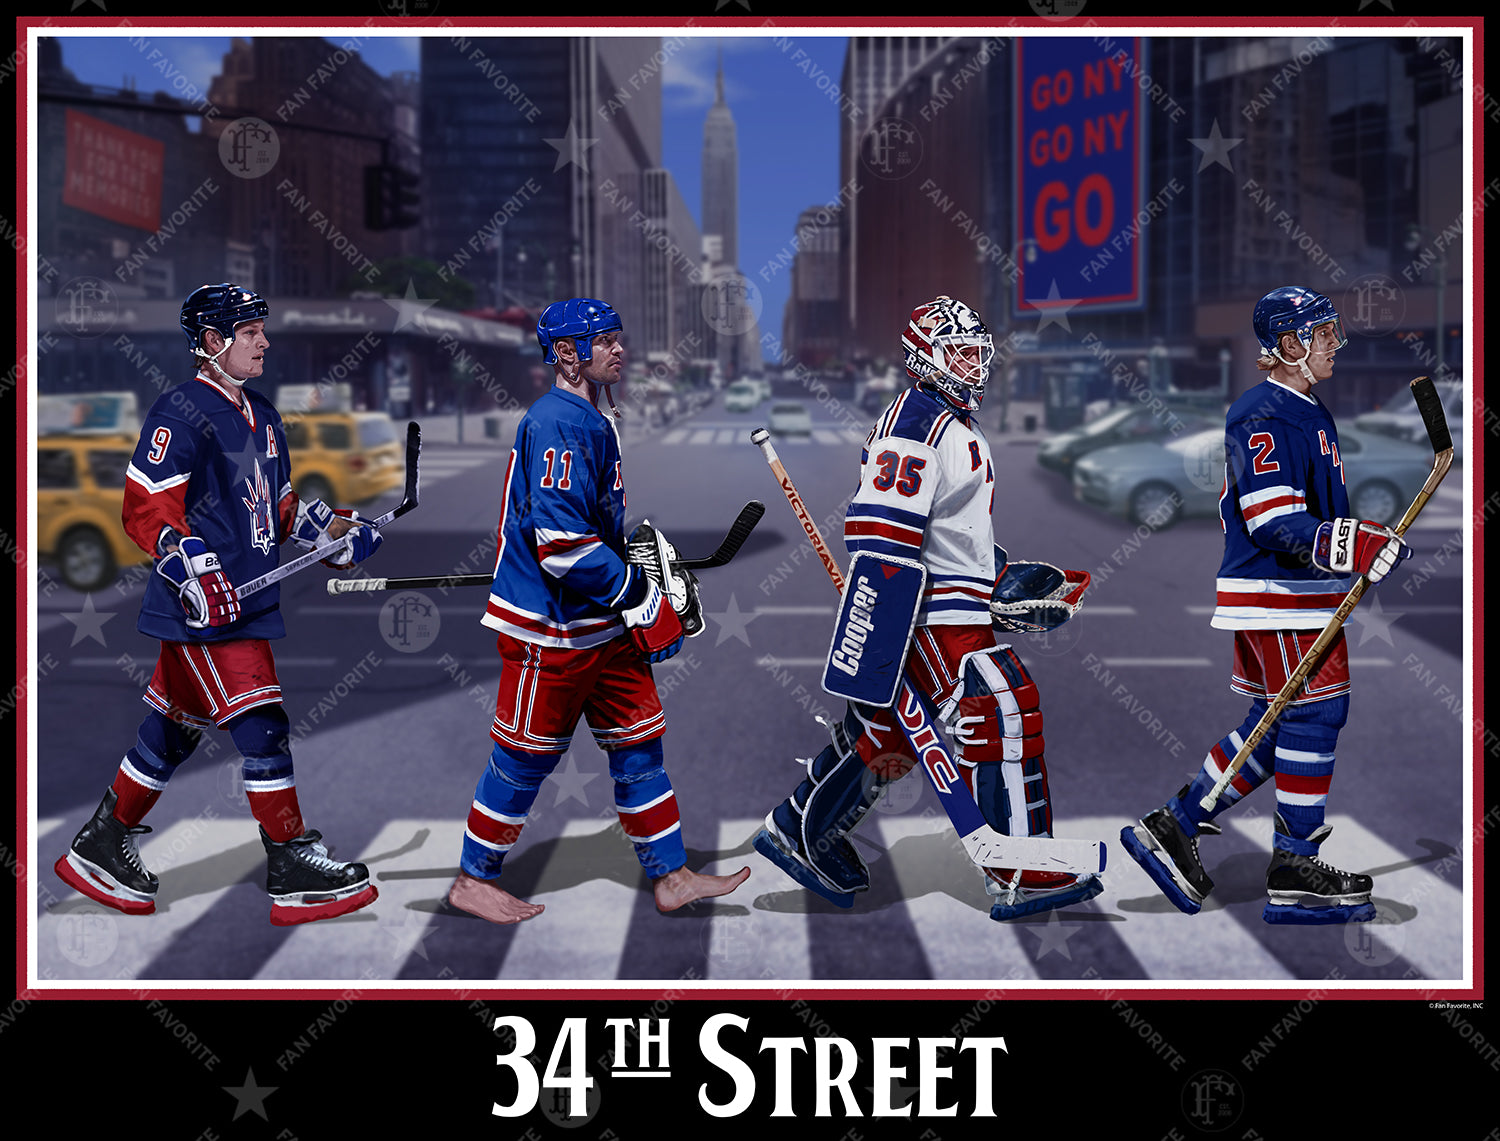 34th Street (Hockey) Wall Print